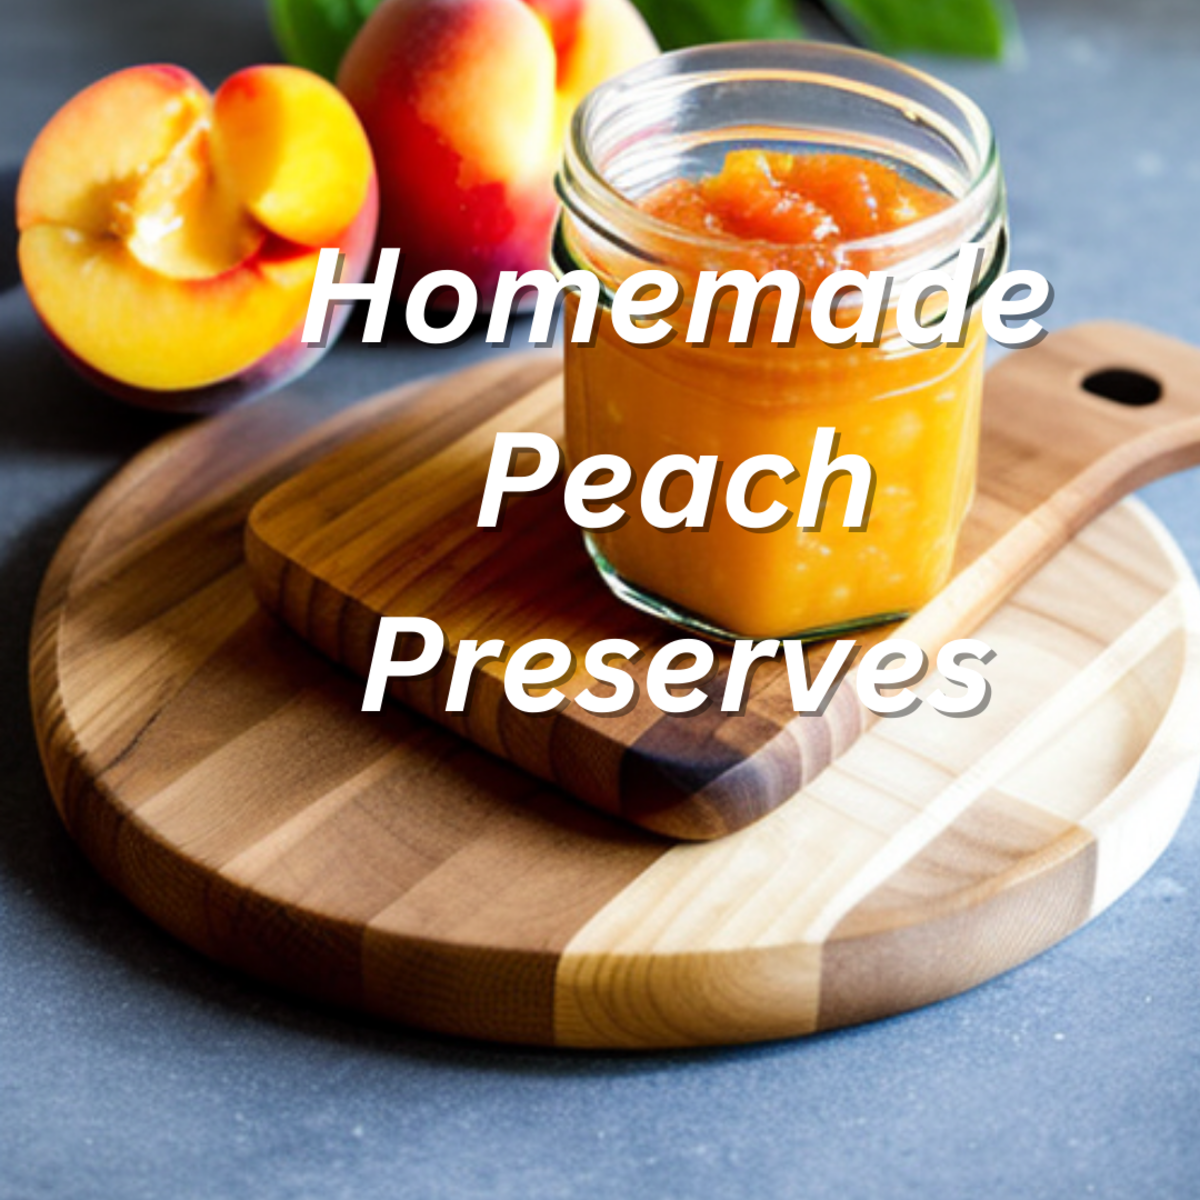 Homemade Southern Peach Preserves